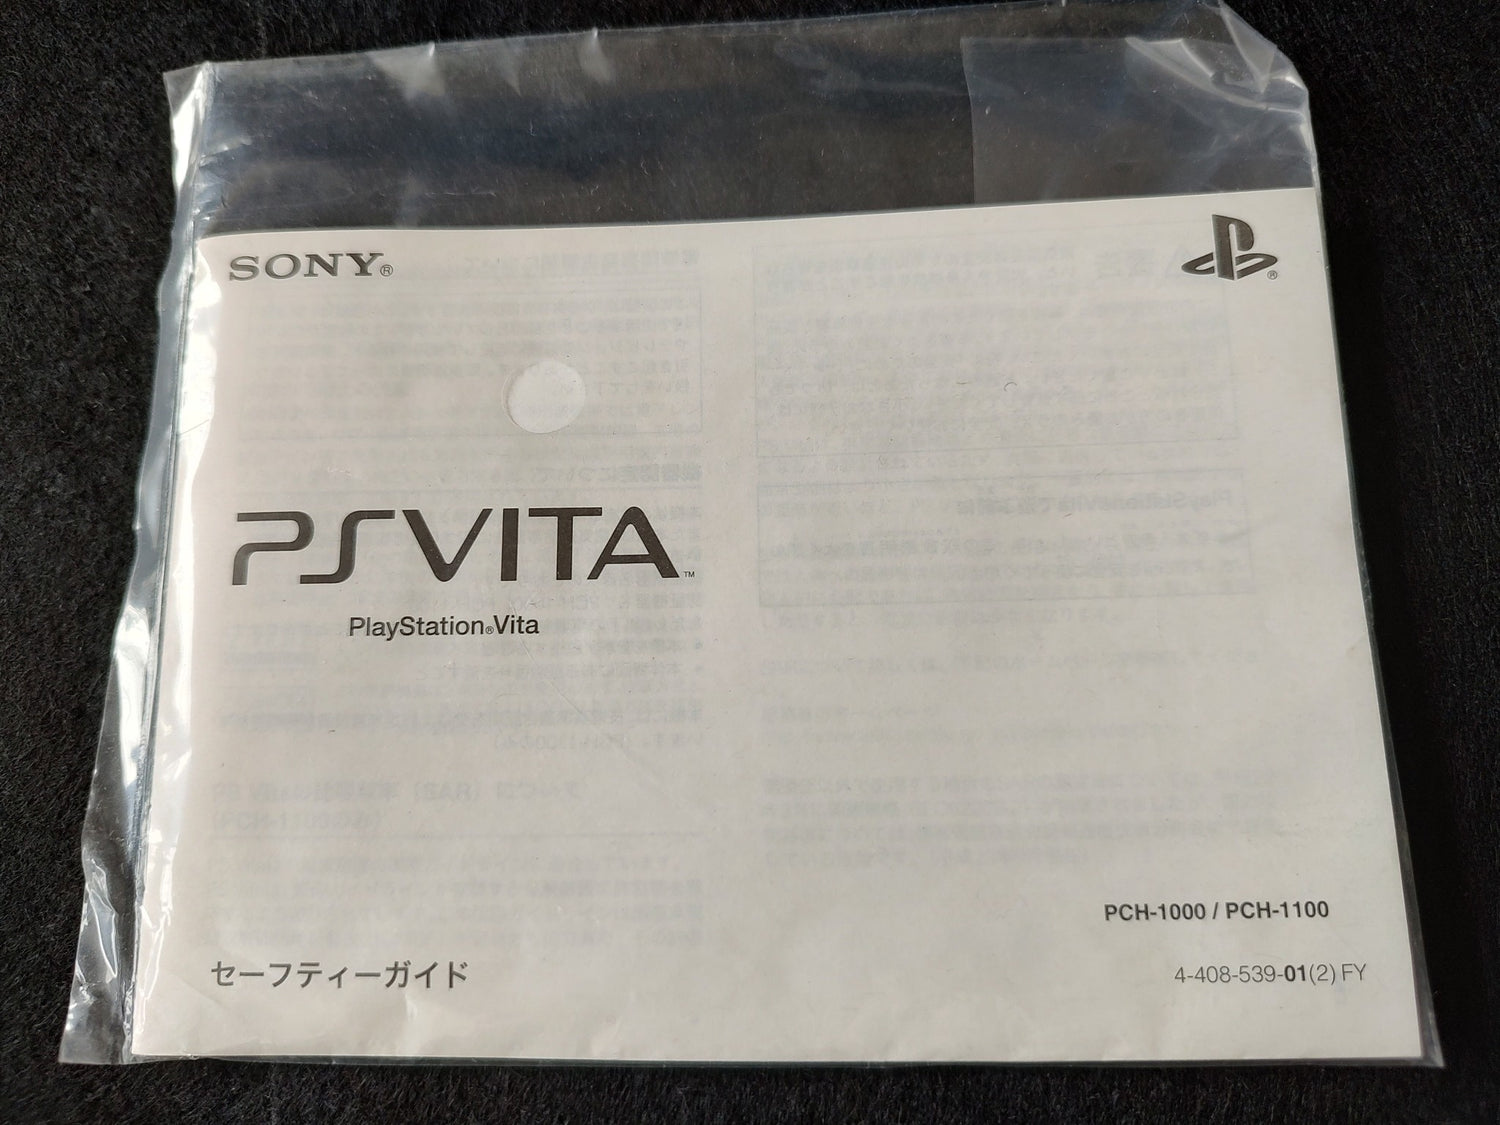 SONY PS Vita PCH-1100 Black Console, w/Manual Box set, Working